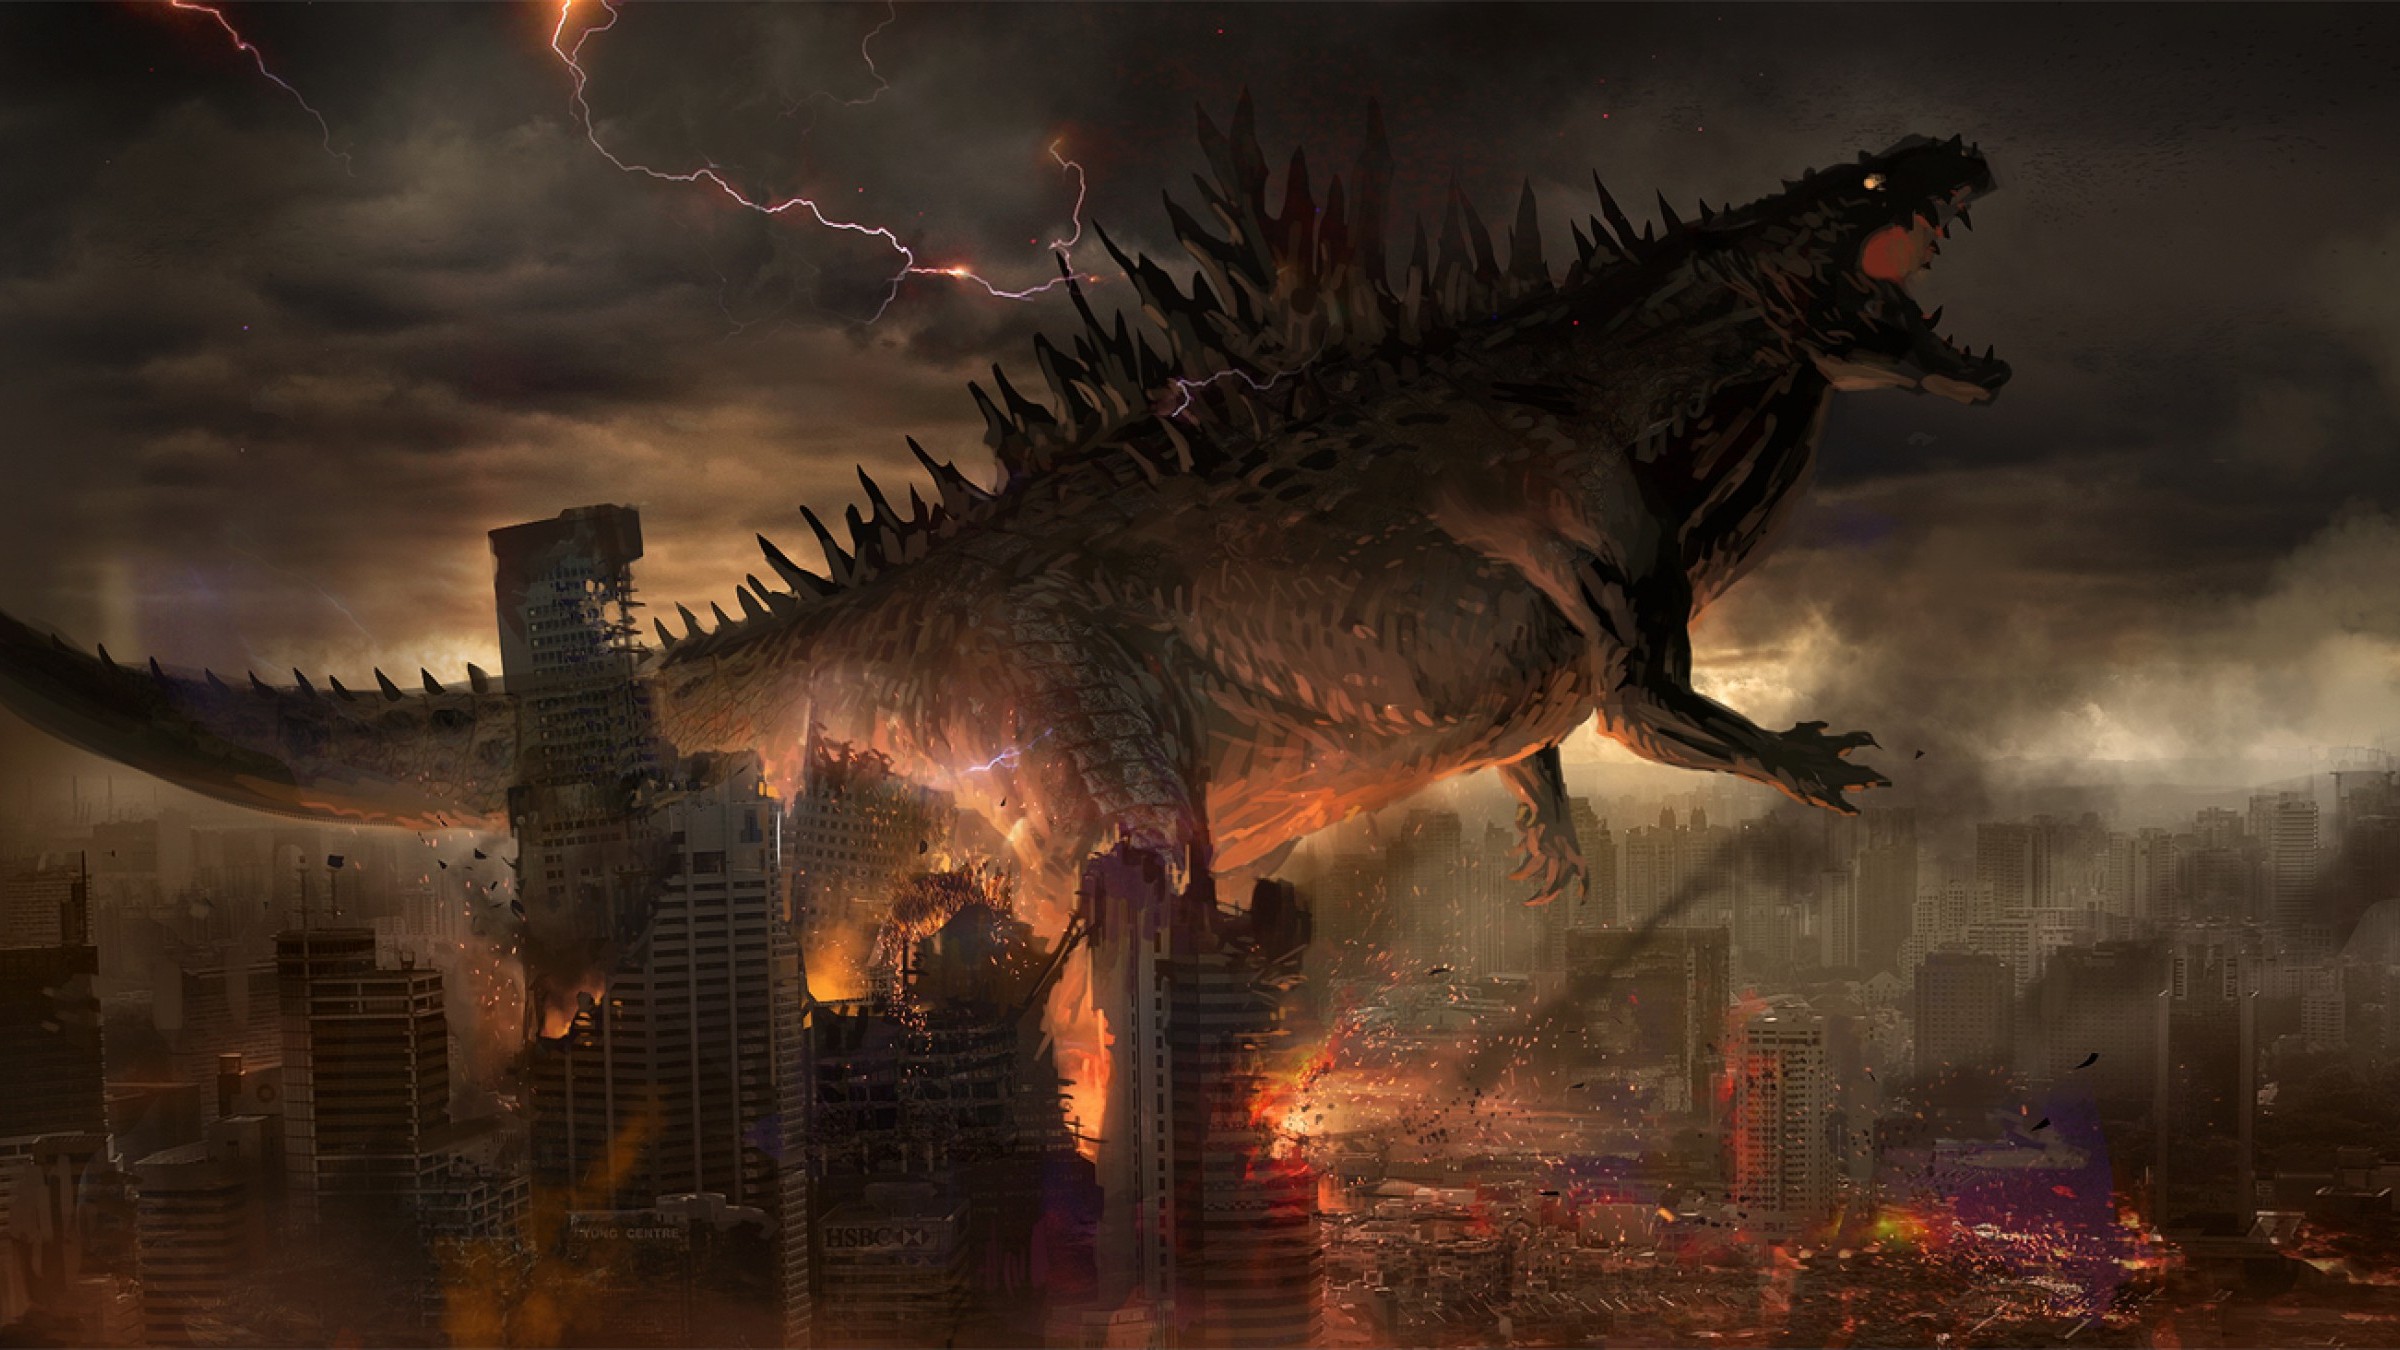 Baixar papel de parede para celular de Fantasia, Godzilla gratuito.